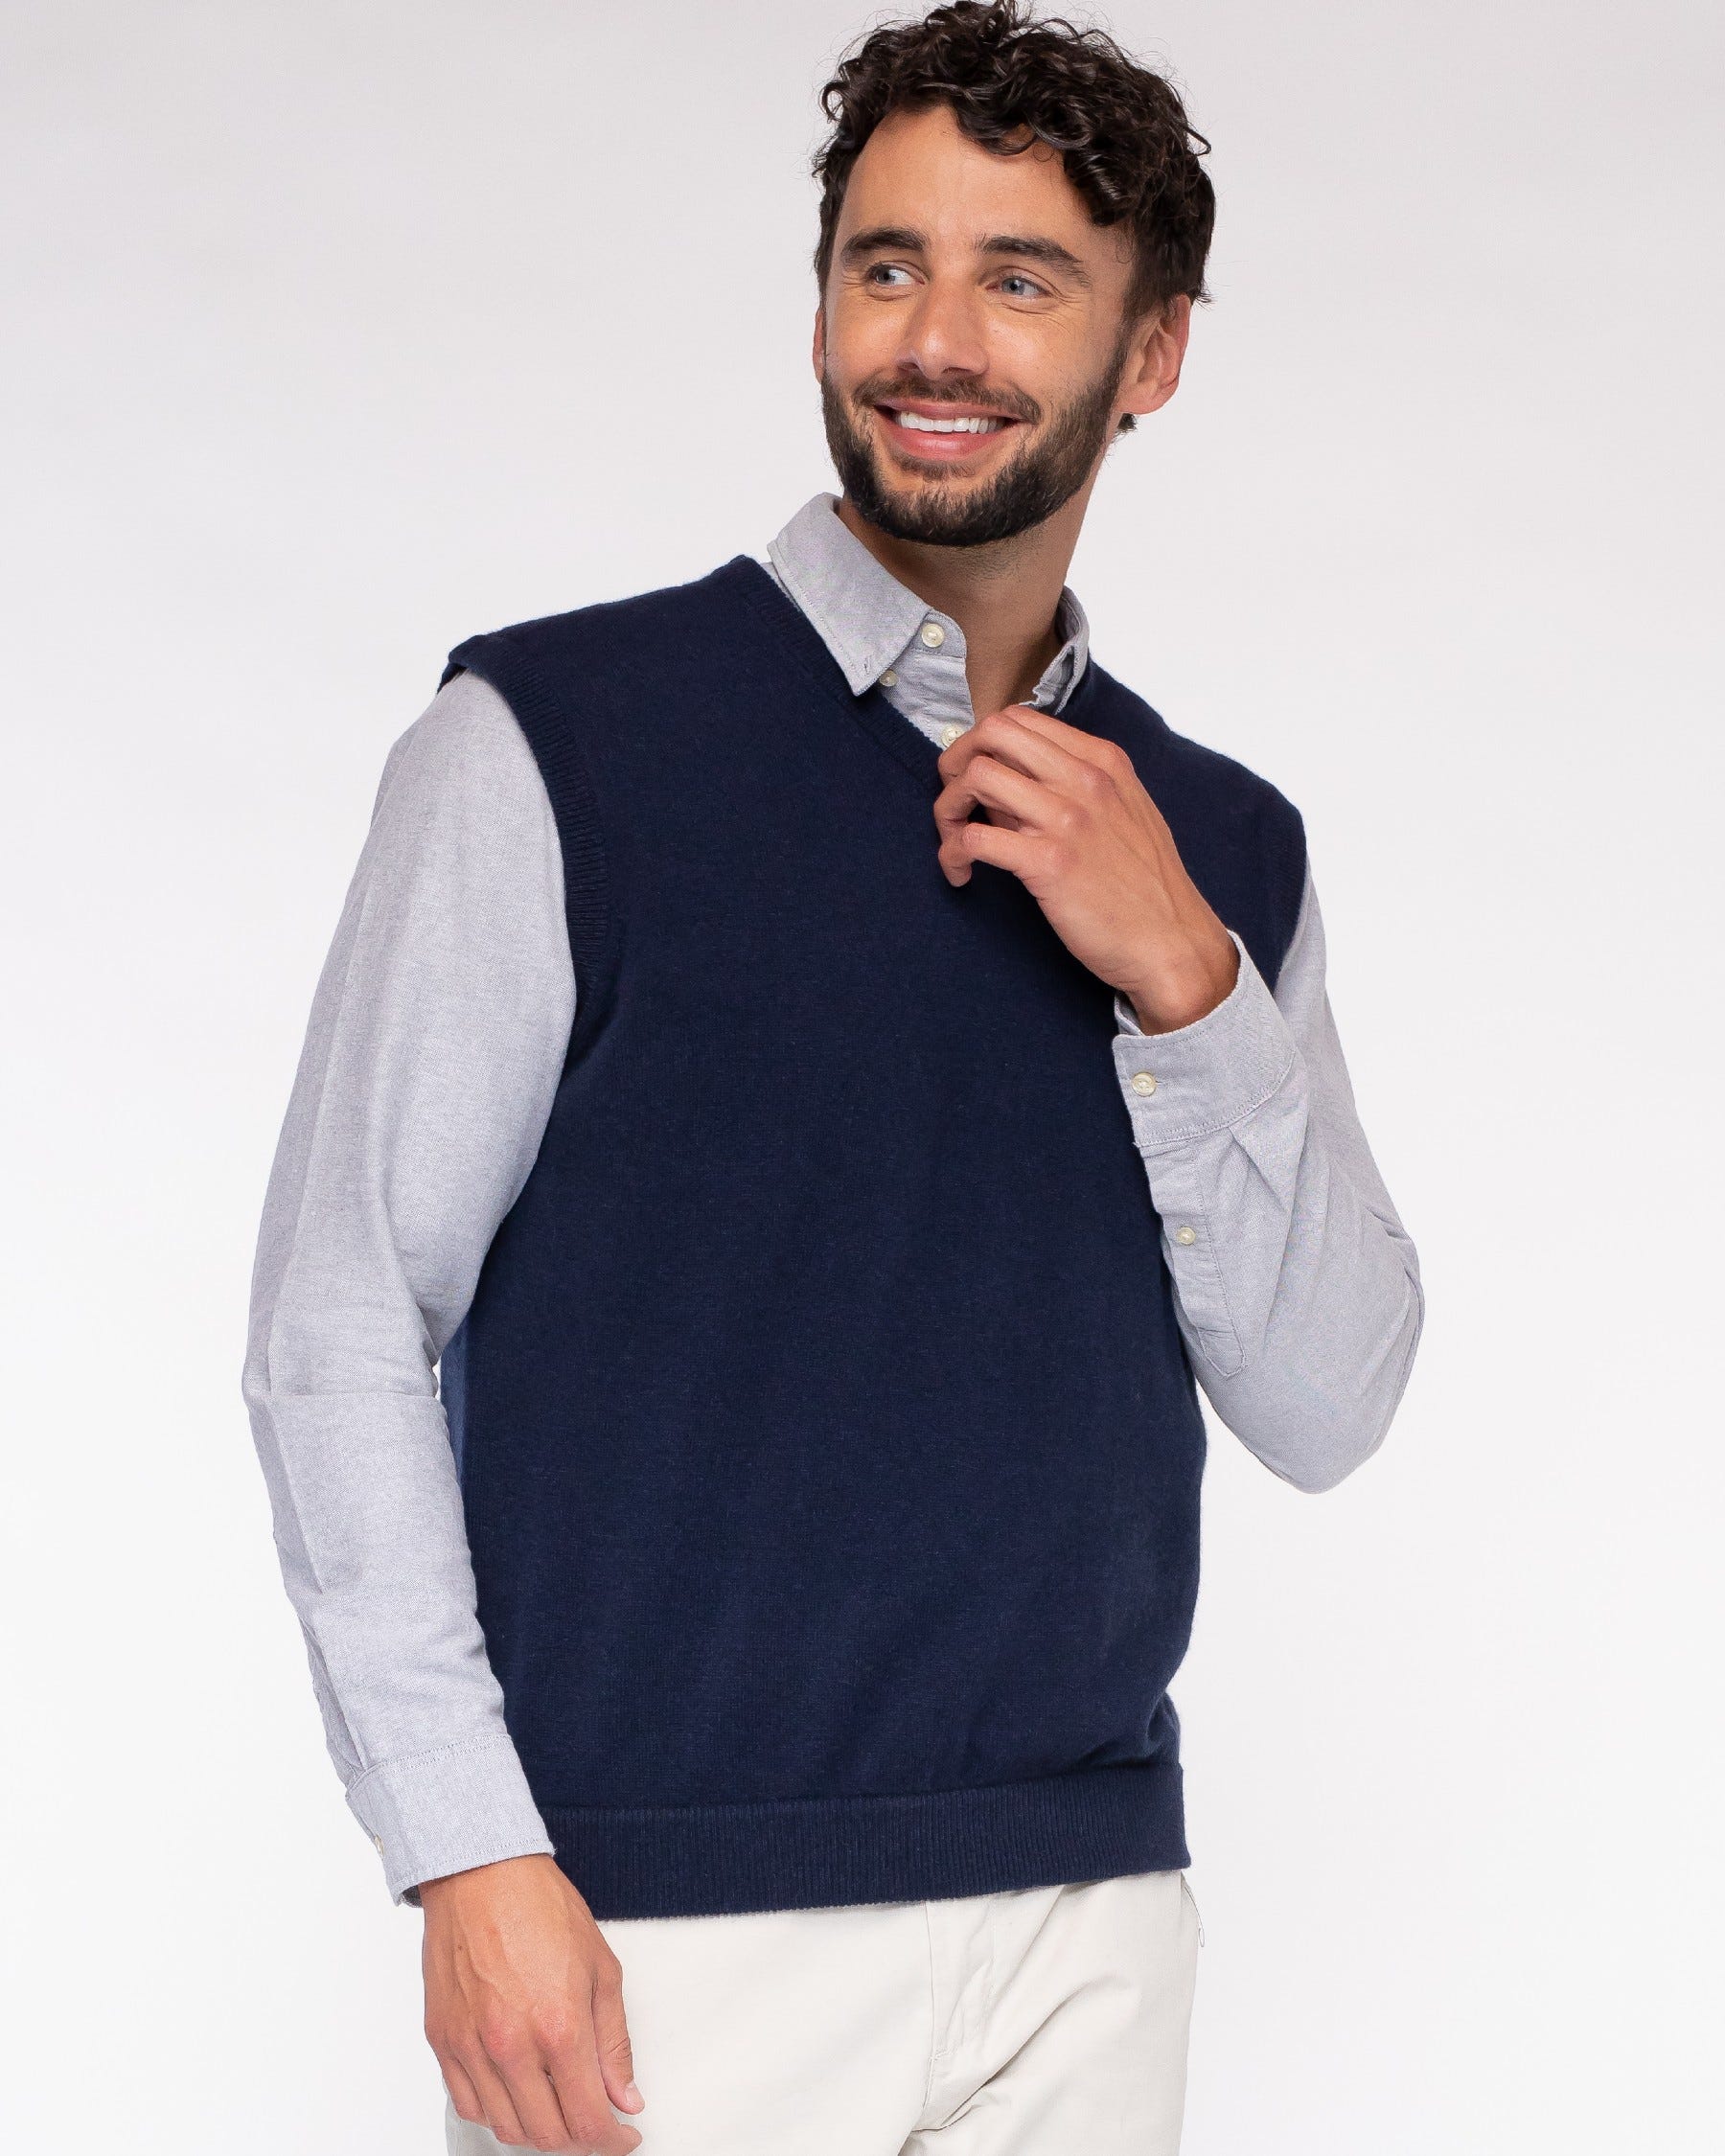 Cotton Cashmere Classic V-Neck Sweater Vest (Choice of Colors) by Alashan Cashmere